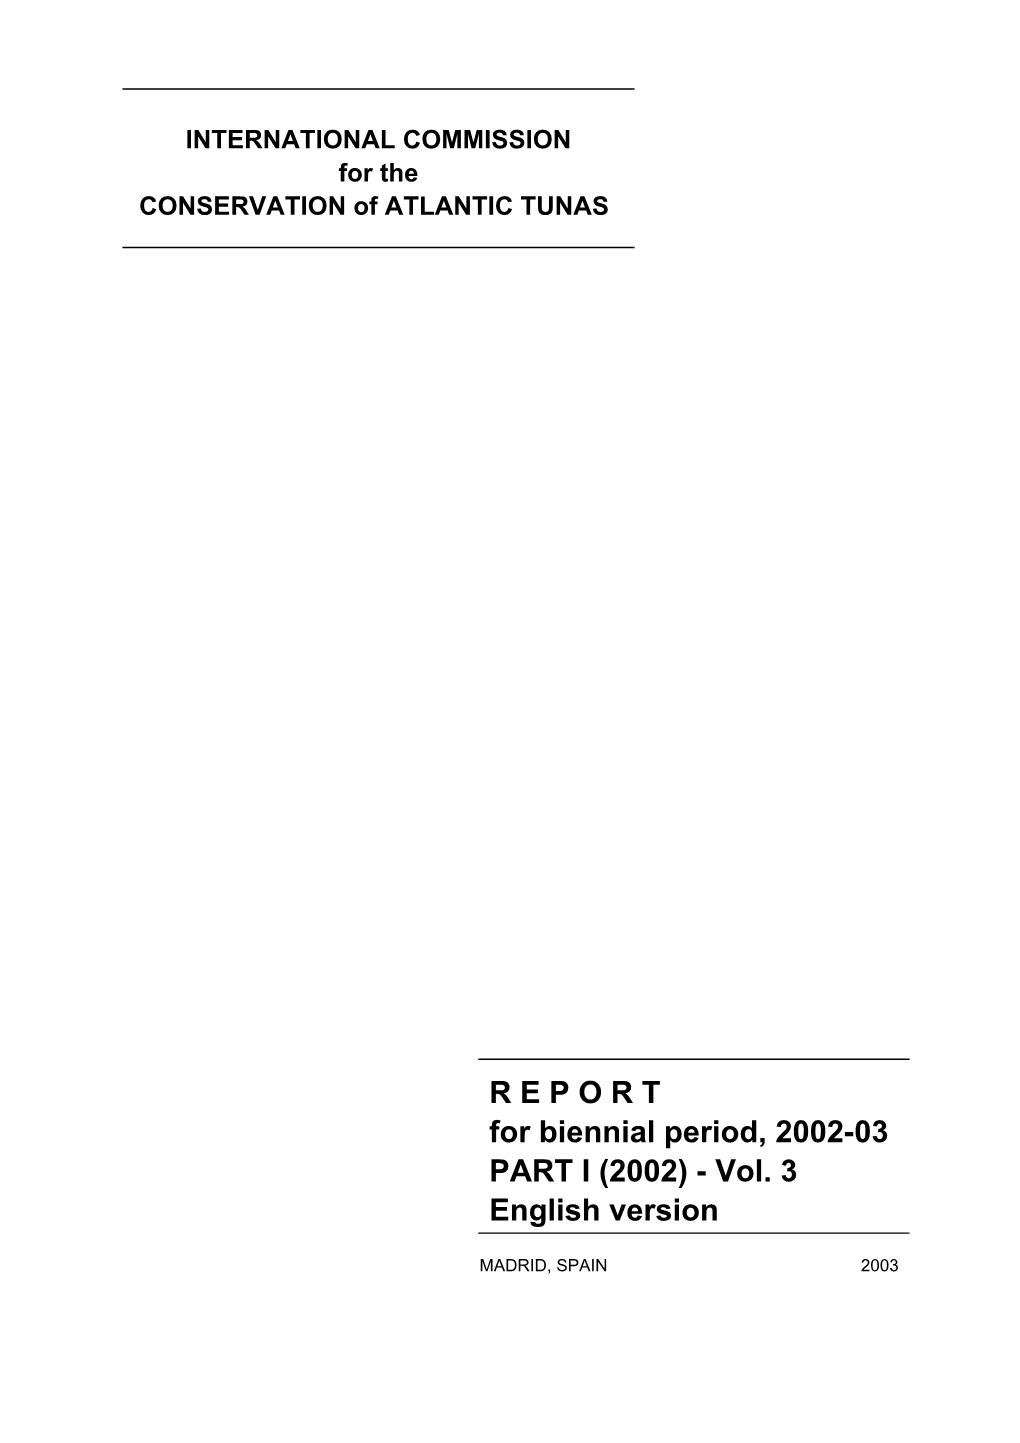 REPORT for Biennial Period, 2002-03 PART I